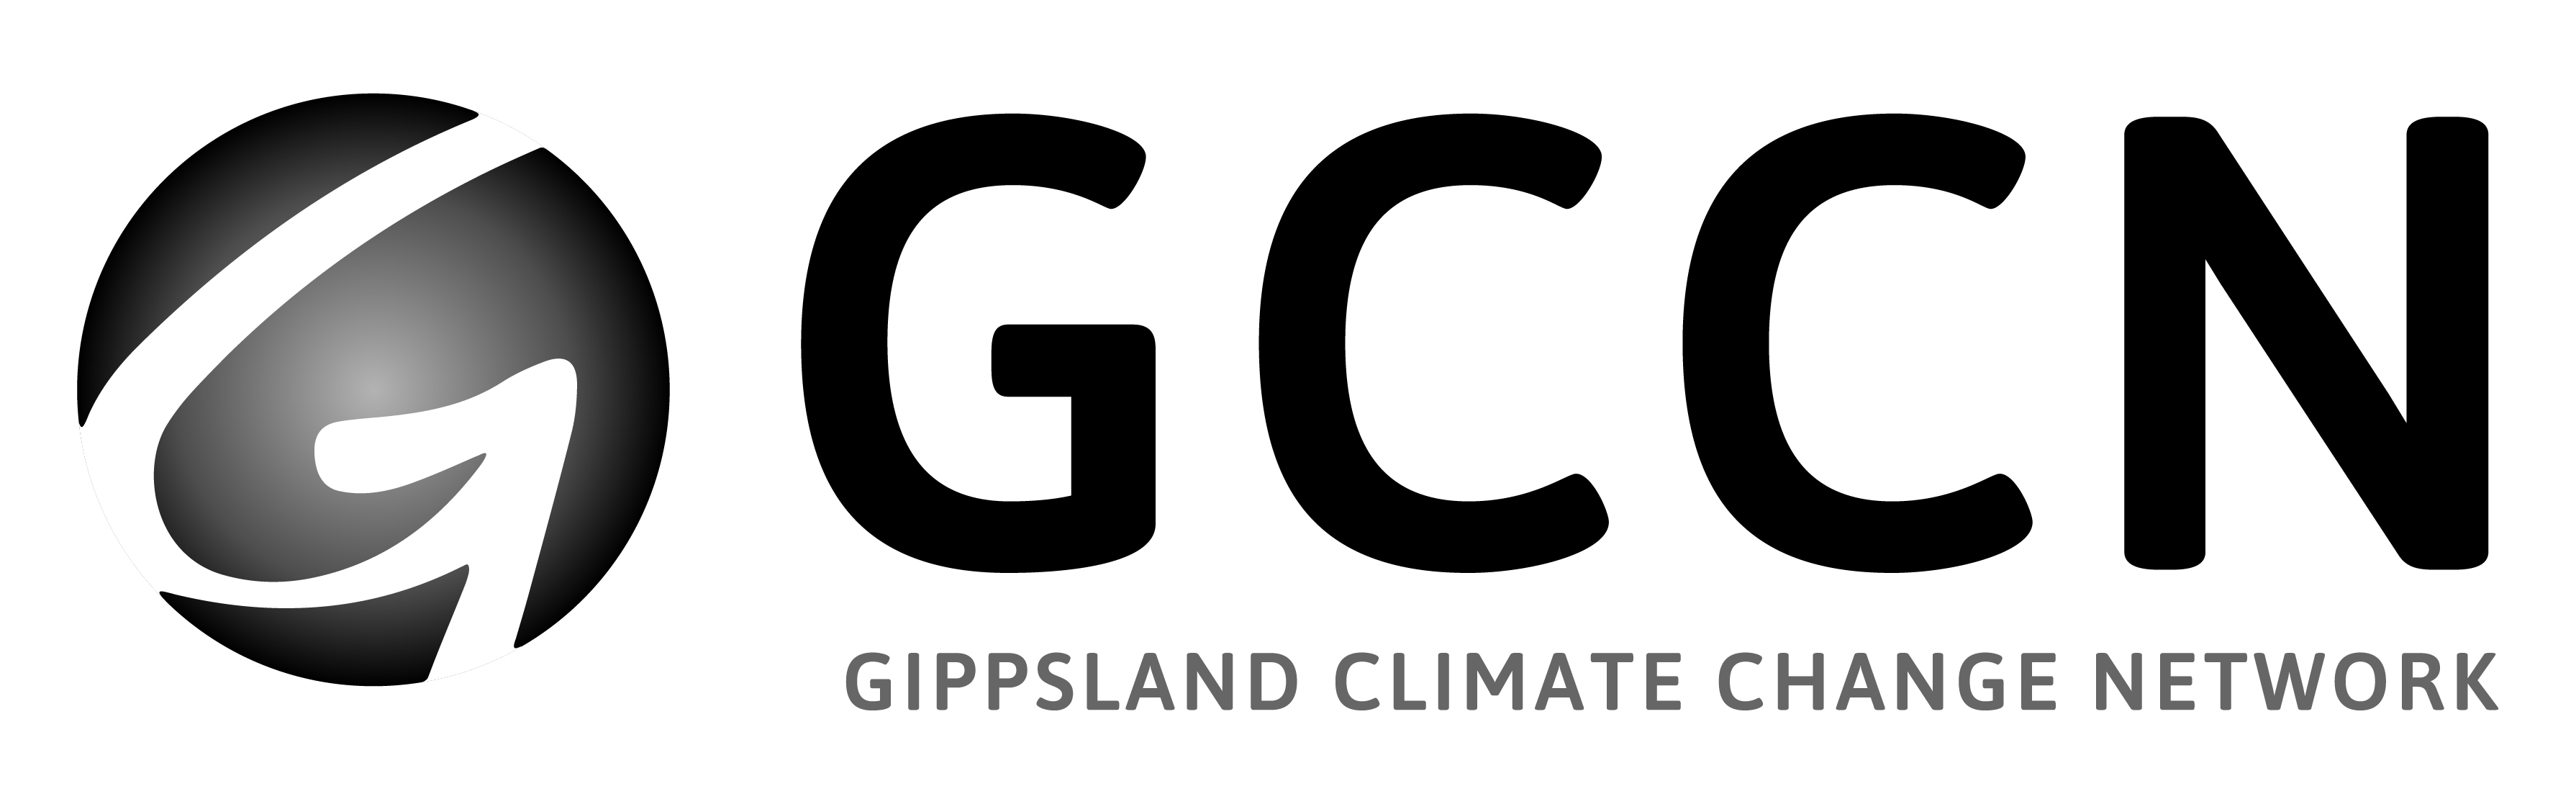 Gippsland Climate Change Network logo